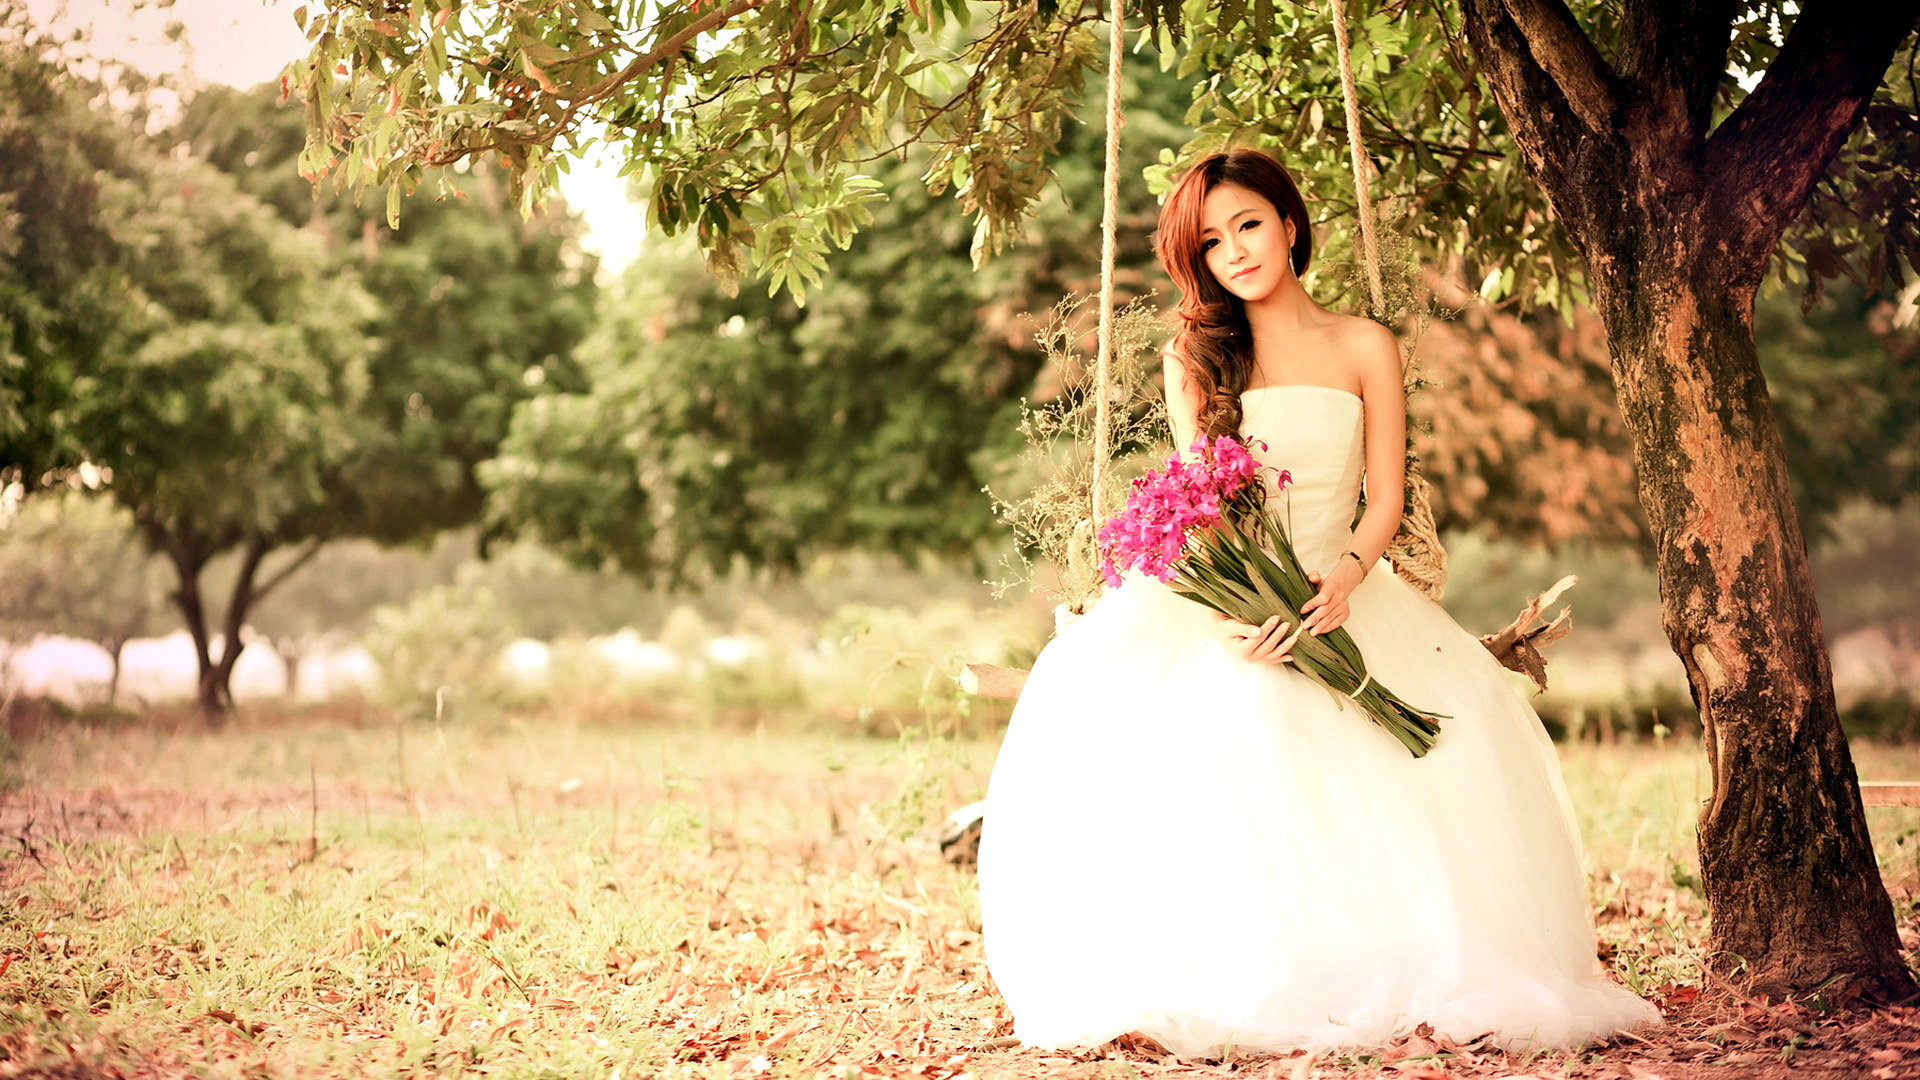 Best Bride in wedding dress wallpaper ID:465939 for High Resolution full hd desktop